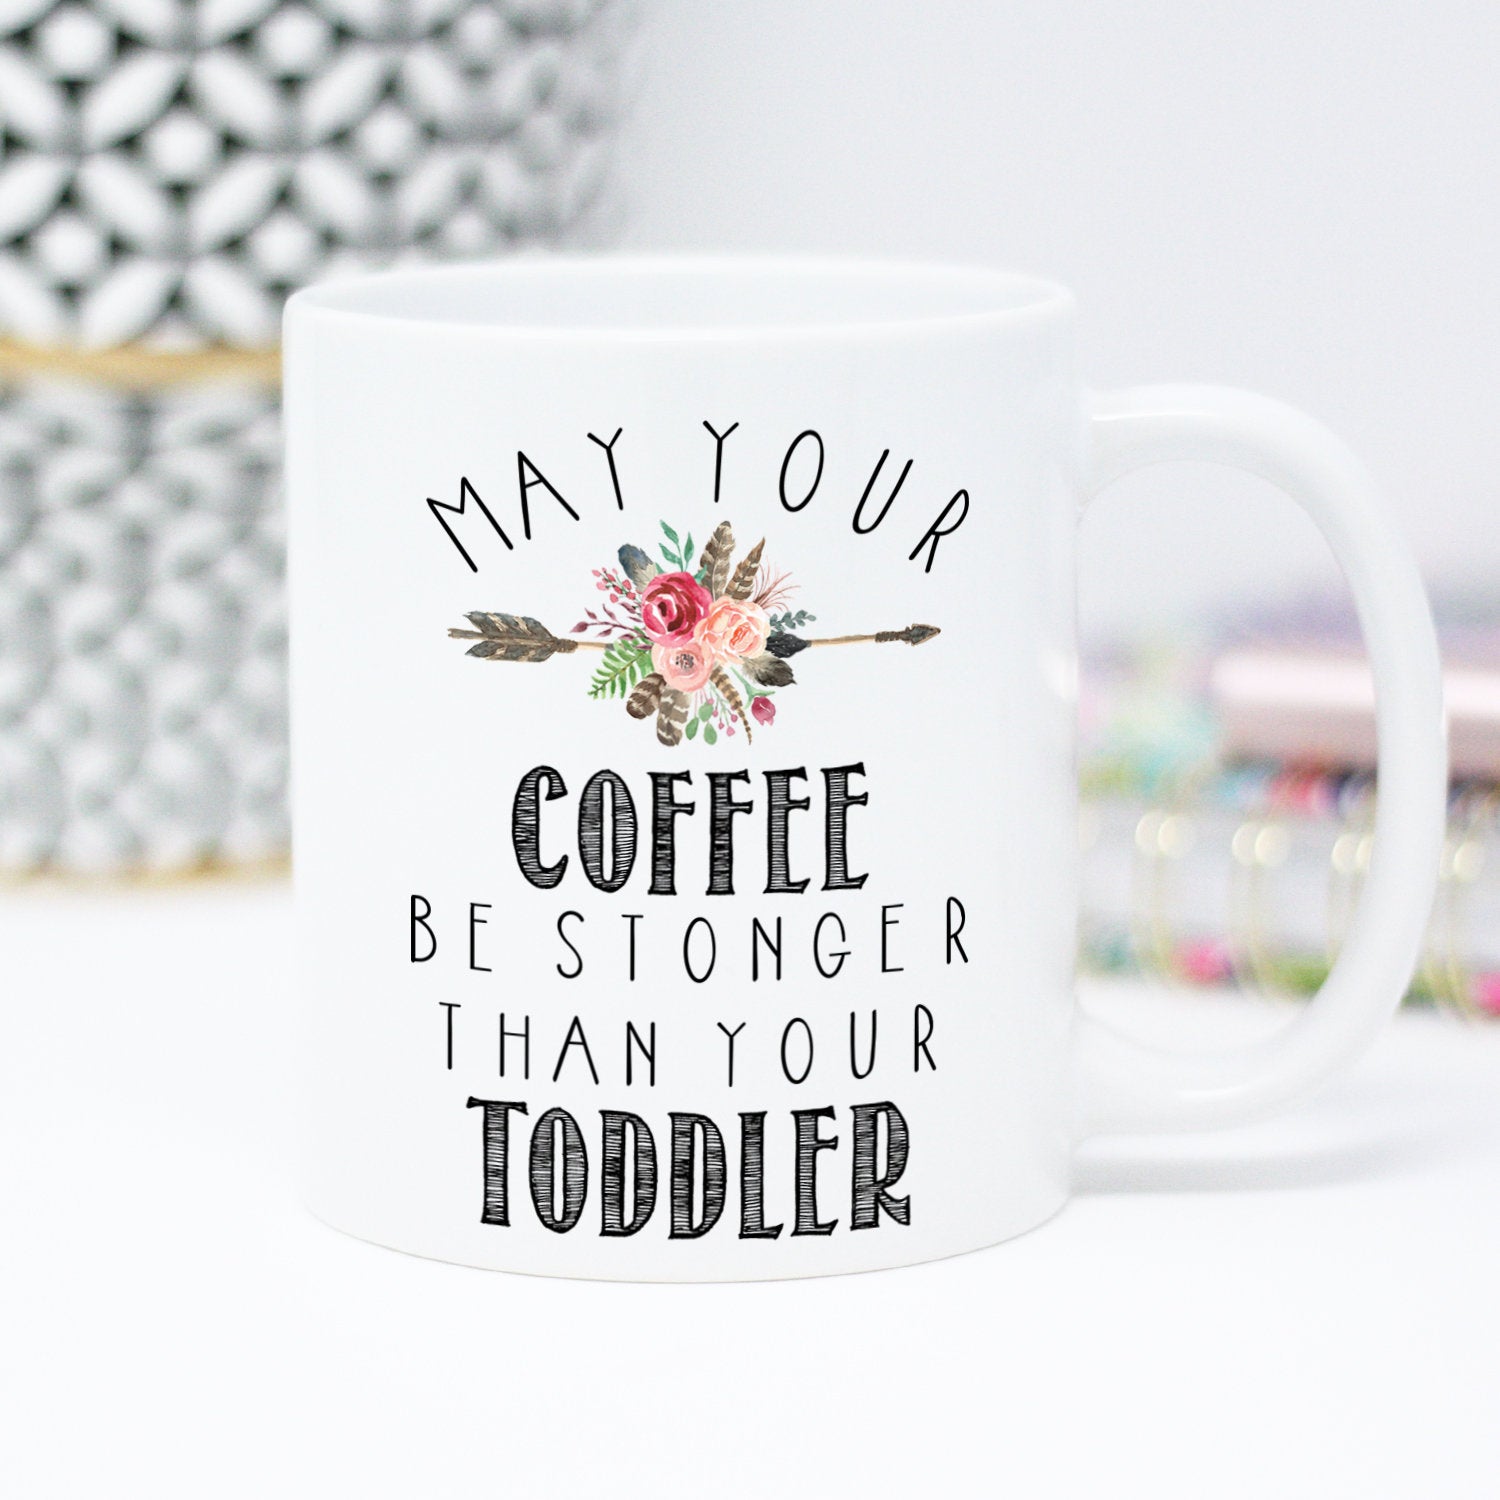 May Your Coffee Be Stronger Than Your Toddler, Coffee Mug, New Mom, Baby Shower Gift, Mom Mug